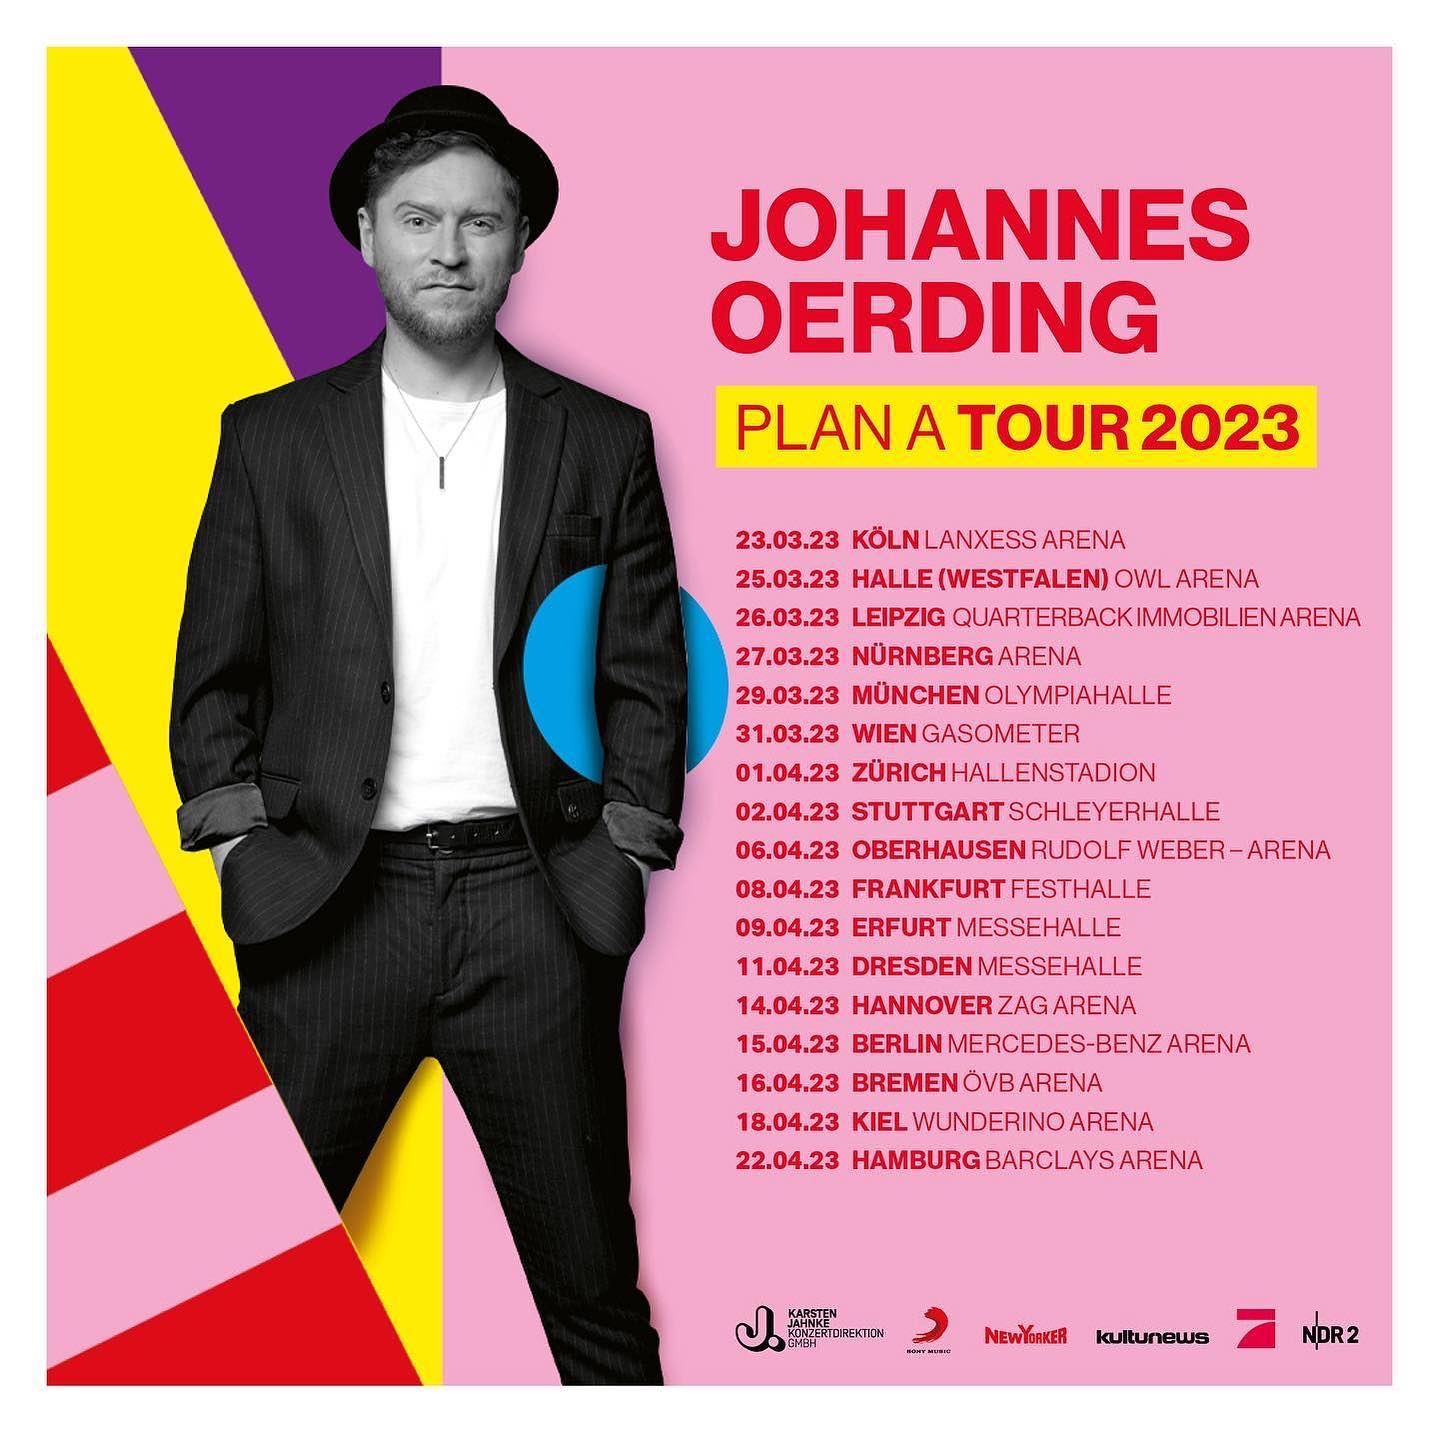 johannes oerding tour 2023 setlist